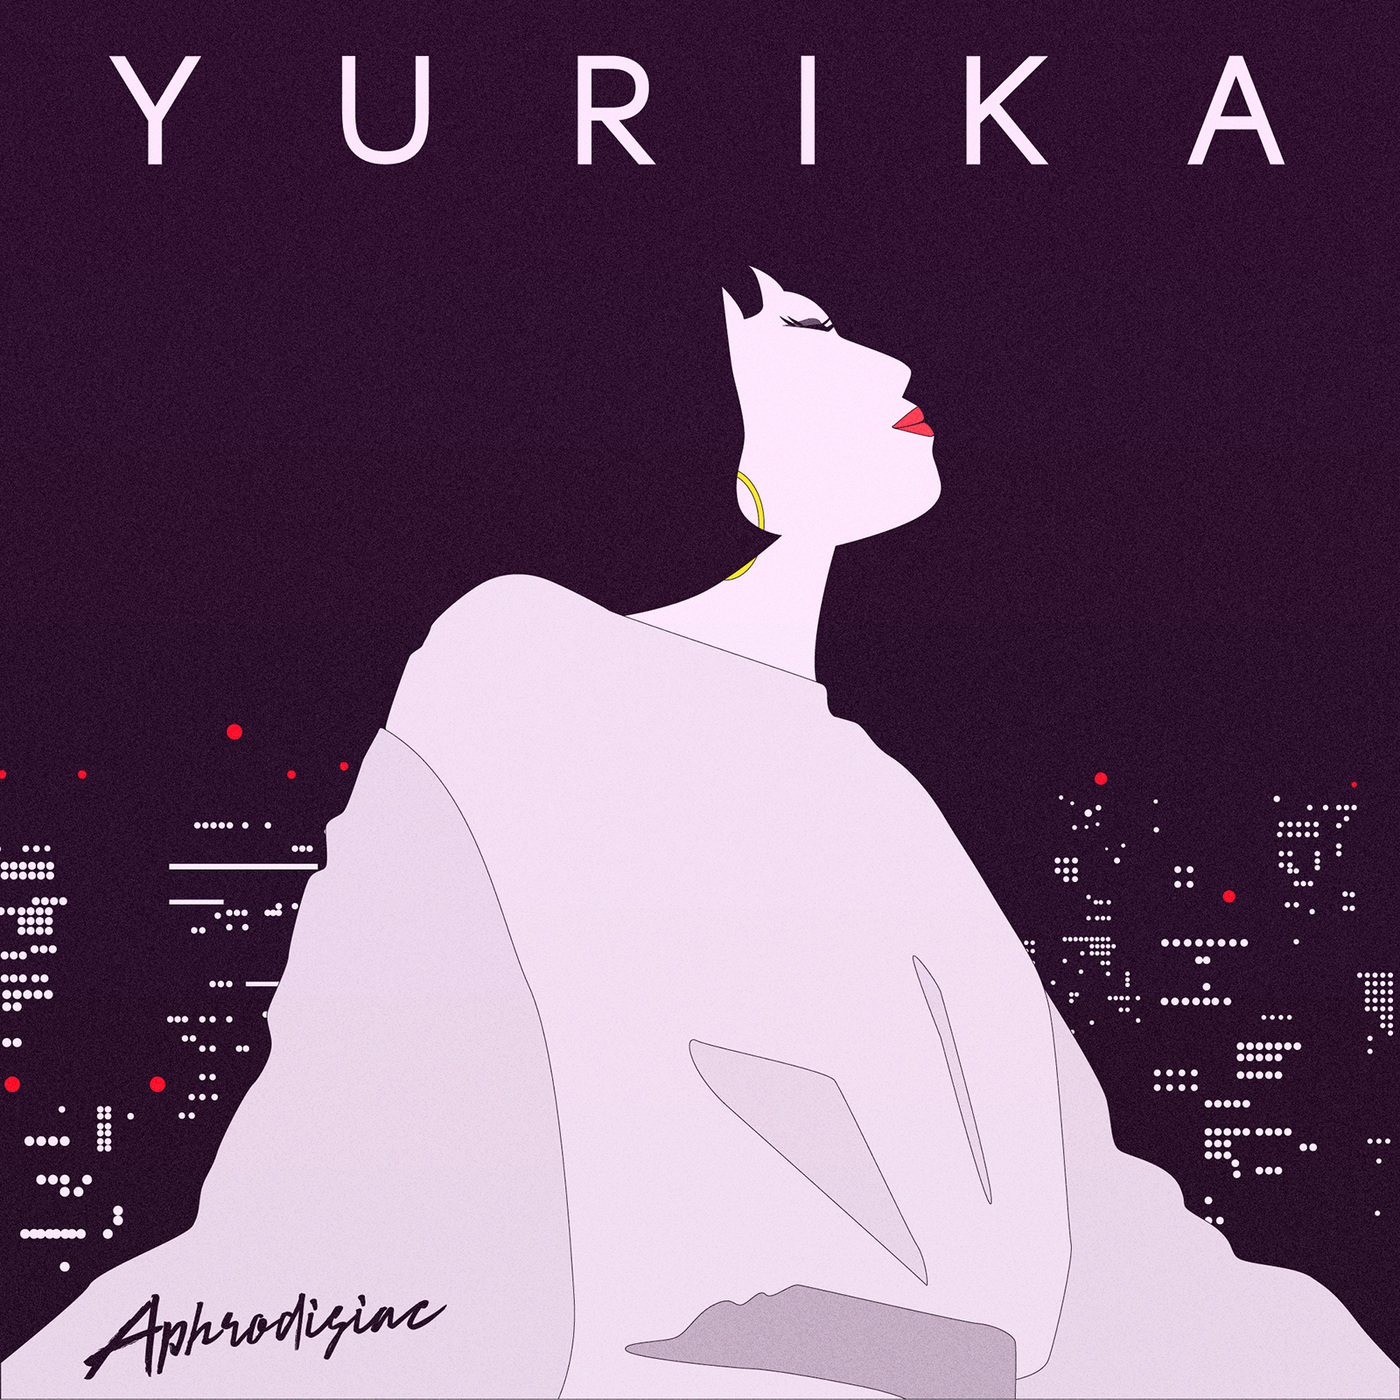 20180620.2322.9 Yurika - Aphrodisiac (FLAC) cover.jpg